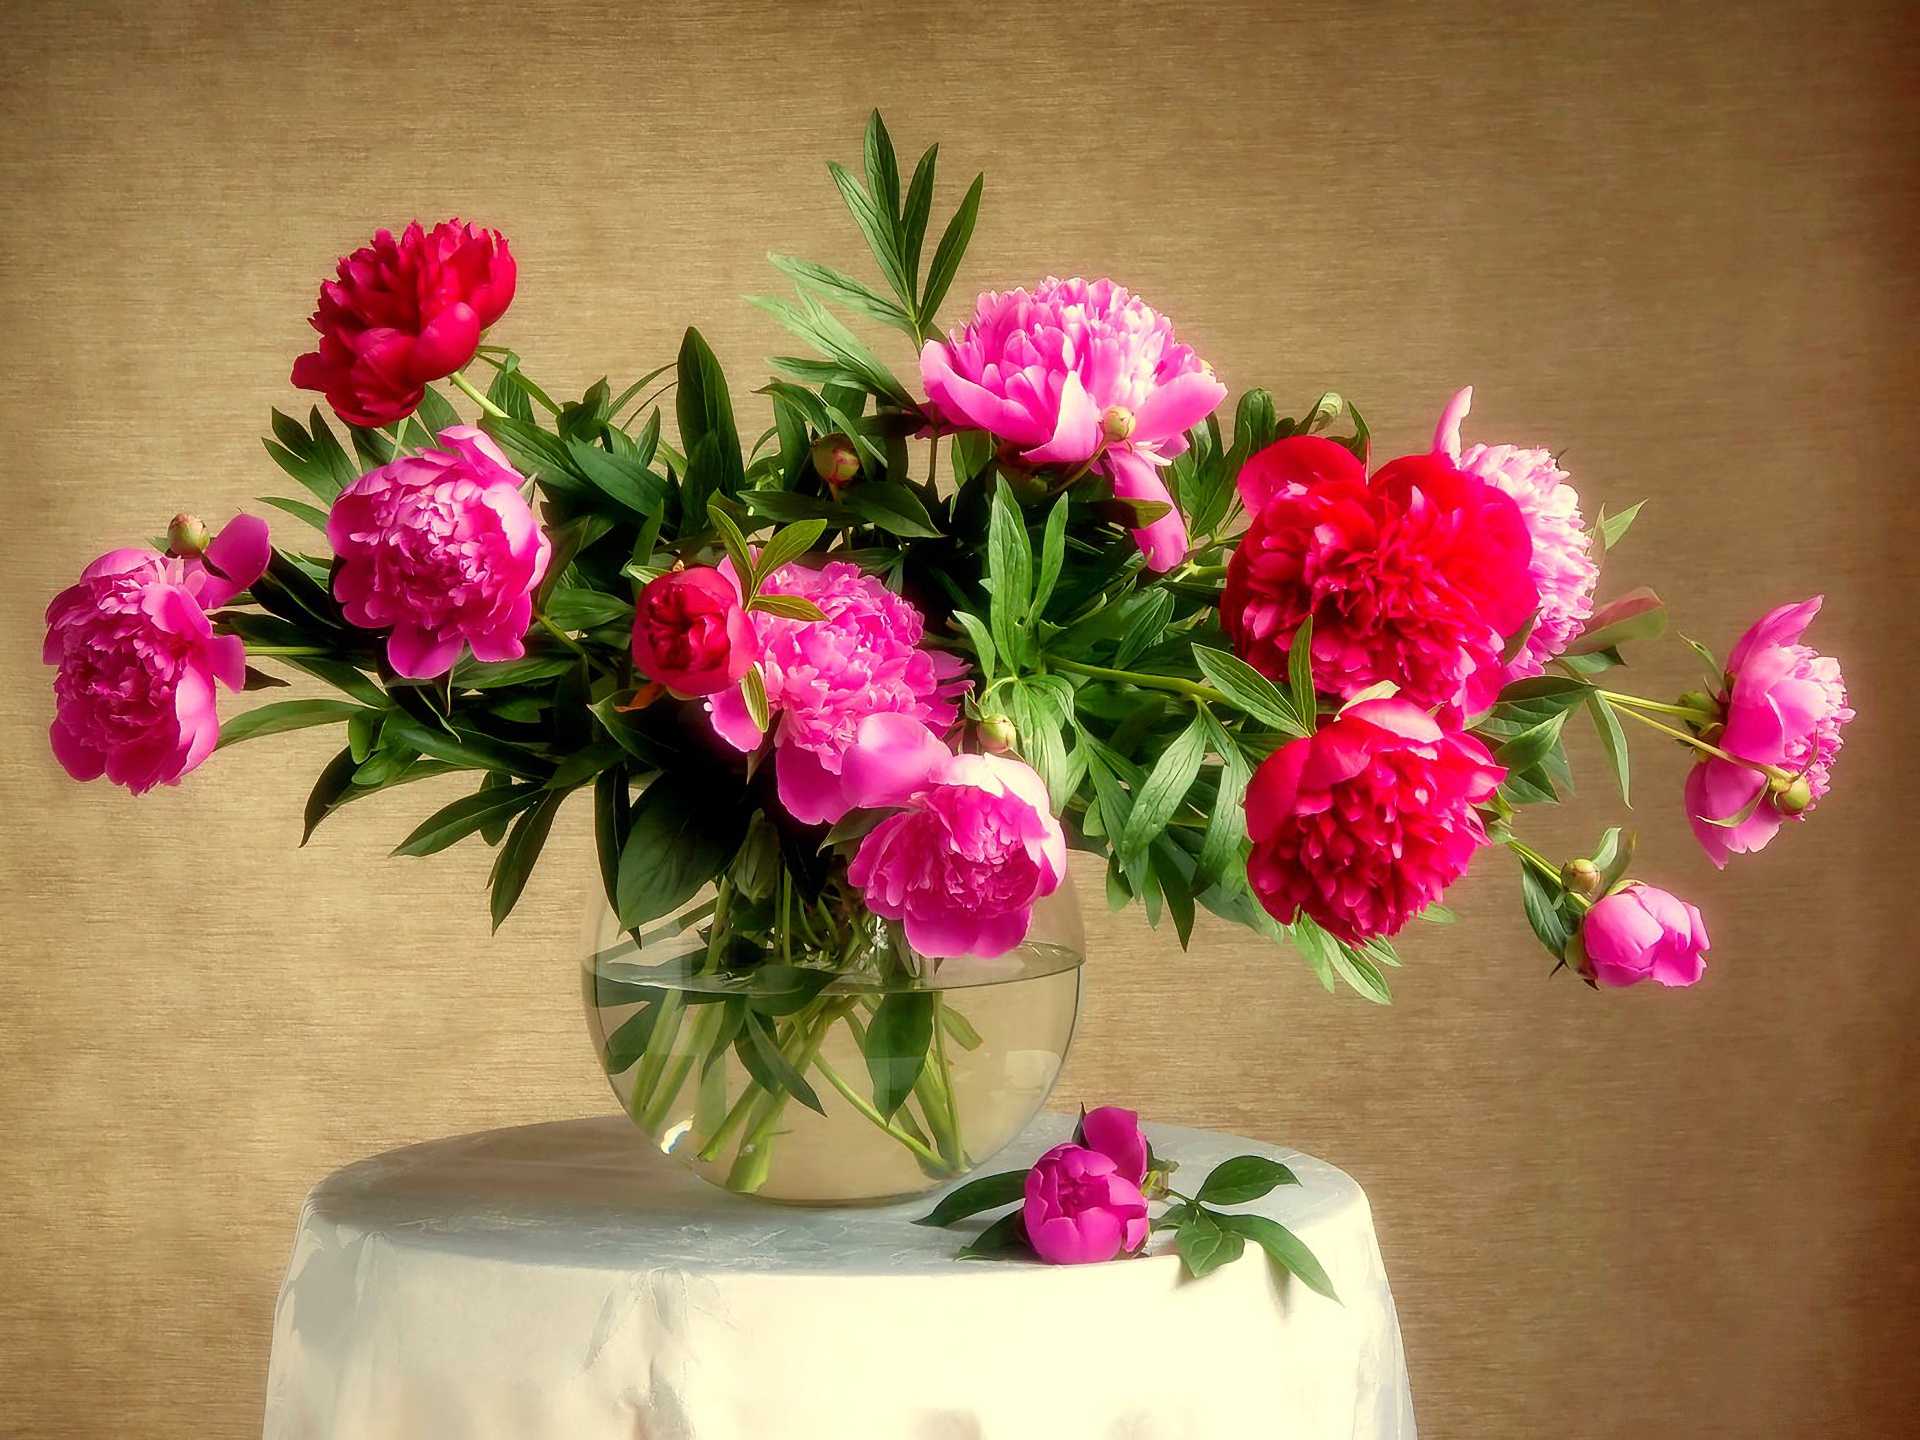 photography, still life, flower, peony, pink flower, vase